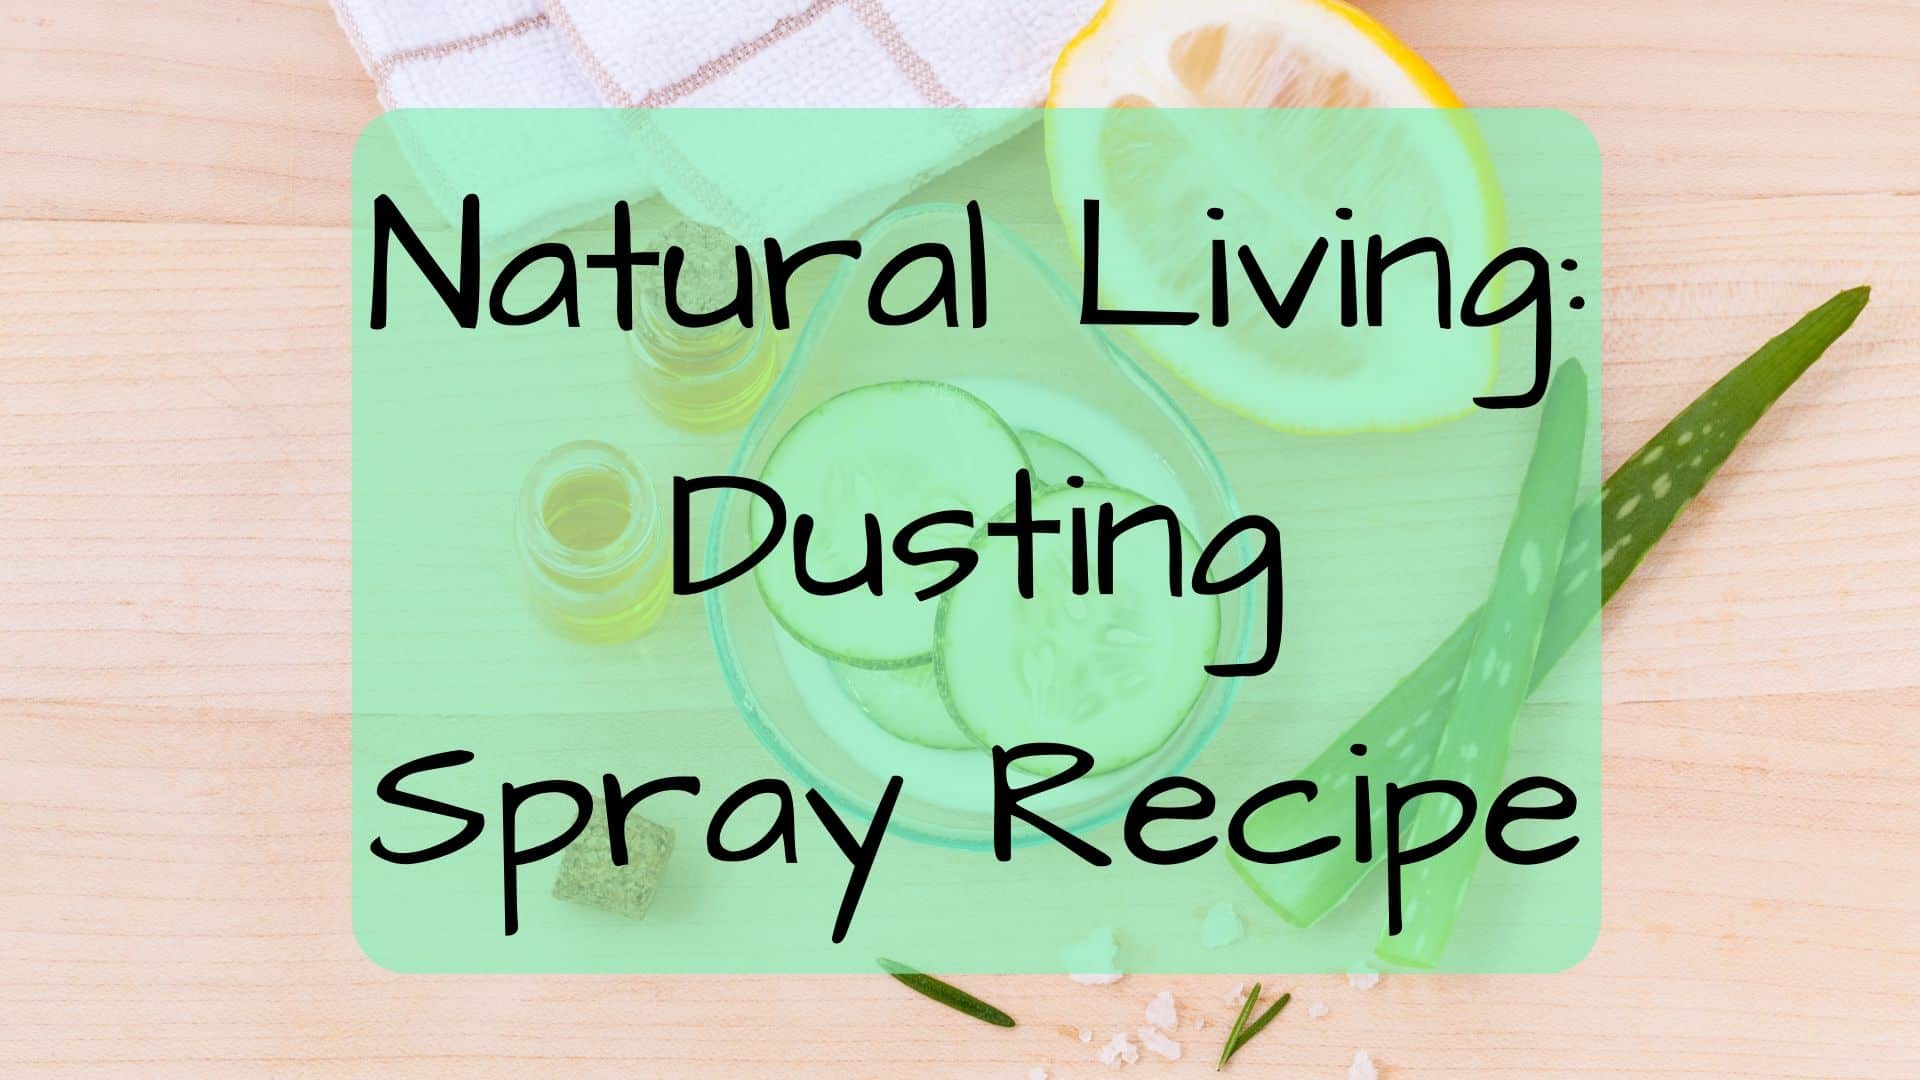 Natural Living: Dusting Spray Recipe